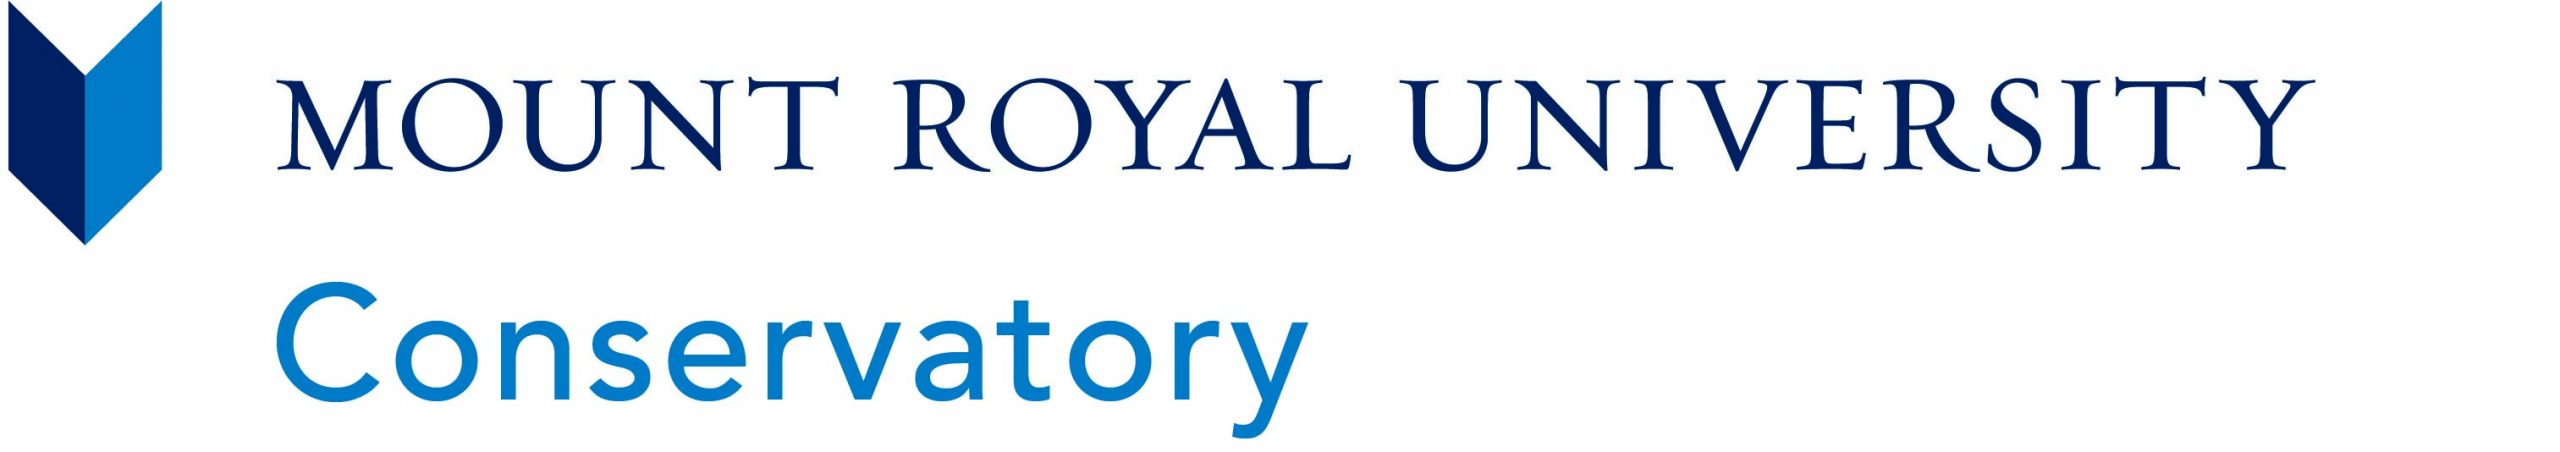 MRU Conservatory Logo